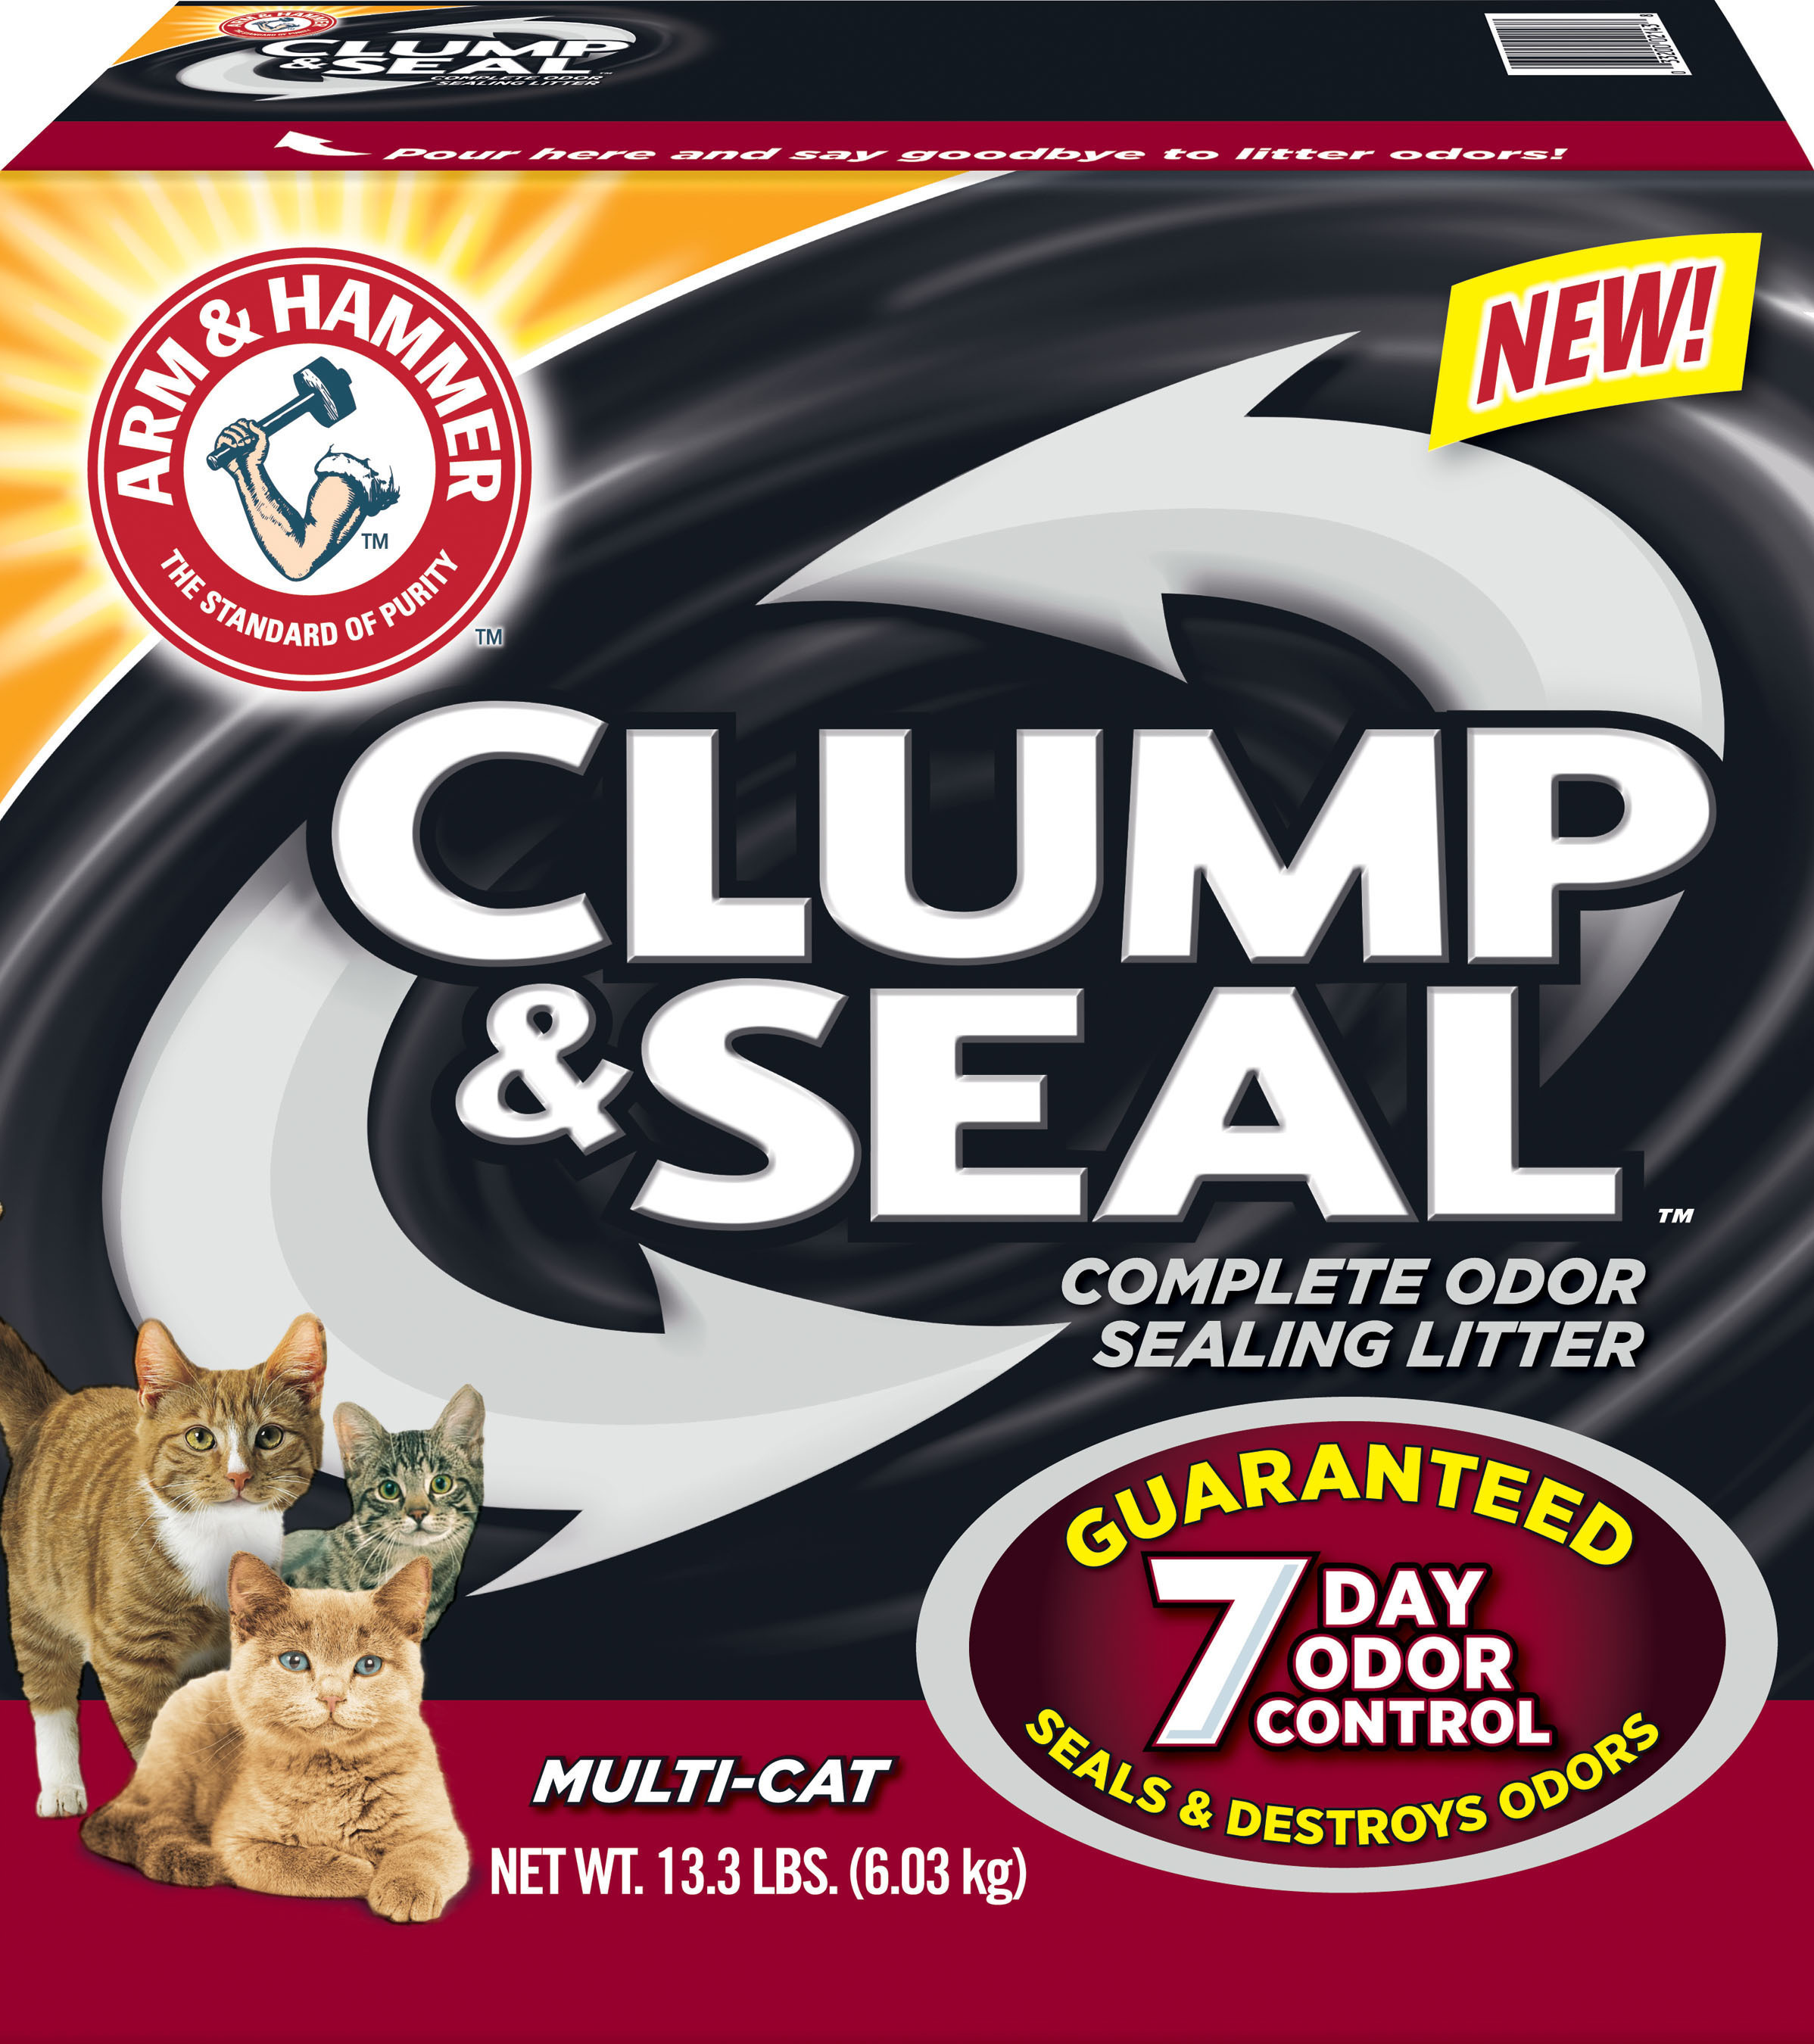 New ARM & HAMMER™ Clump & Seal™ Cat Litter Provides FirstofitsKind